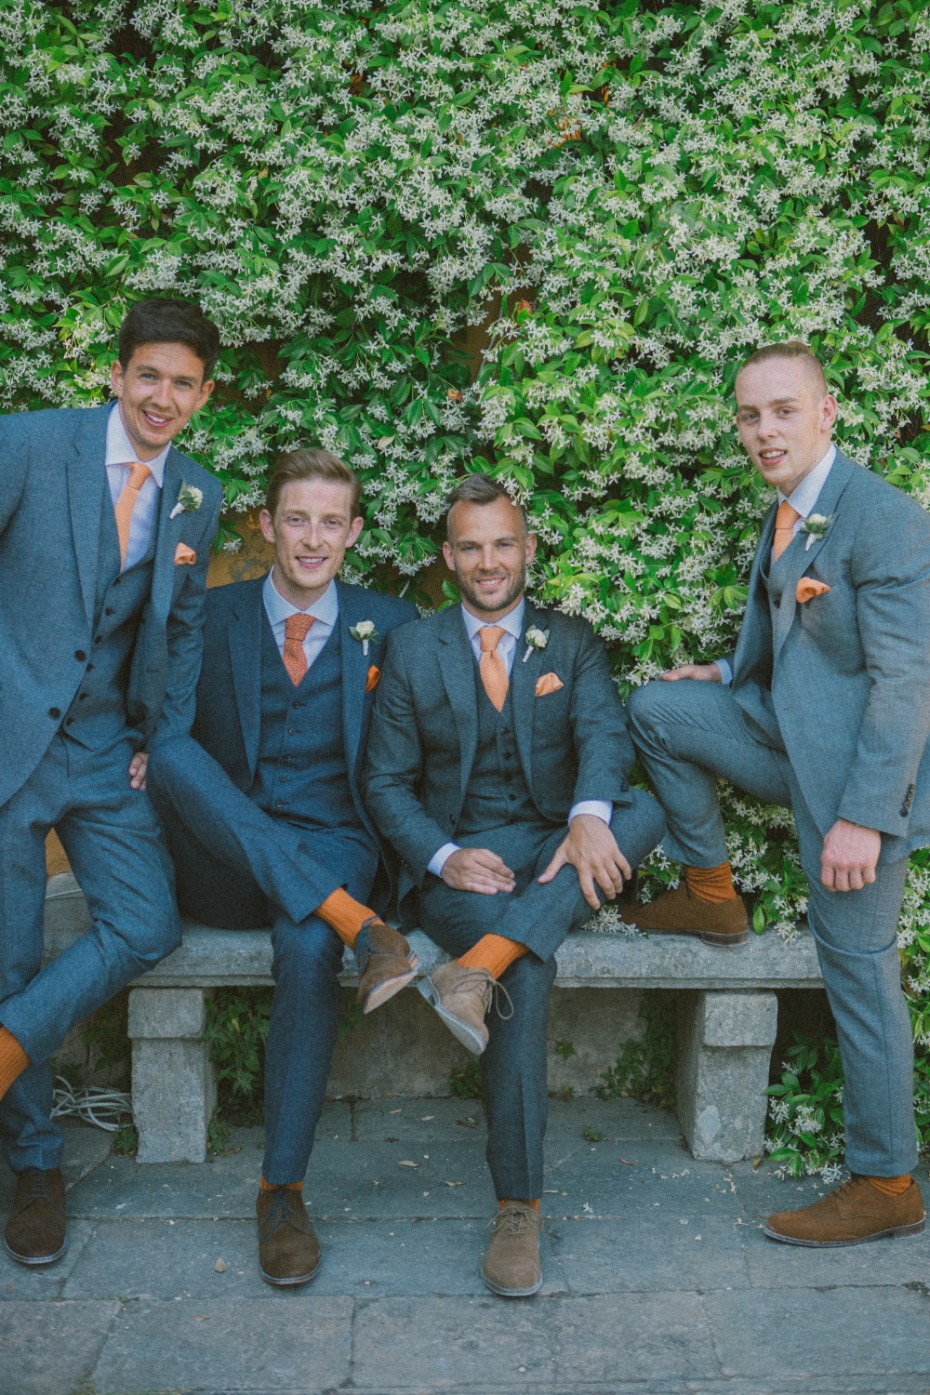 Grey and orange groomsman suits